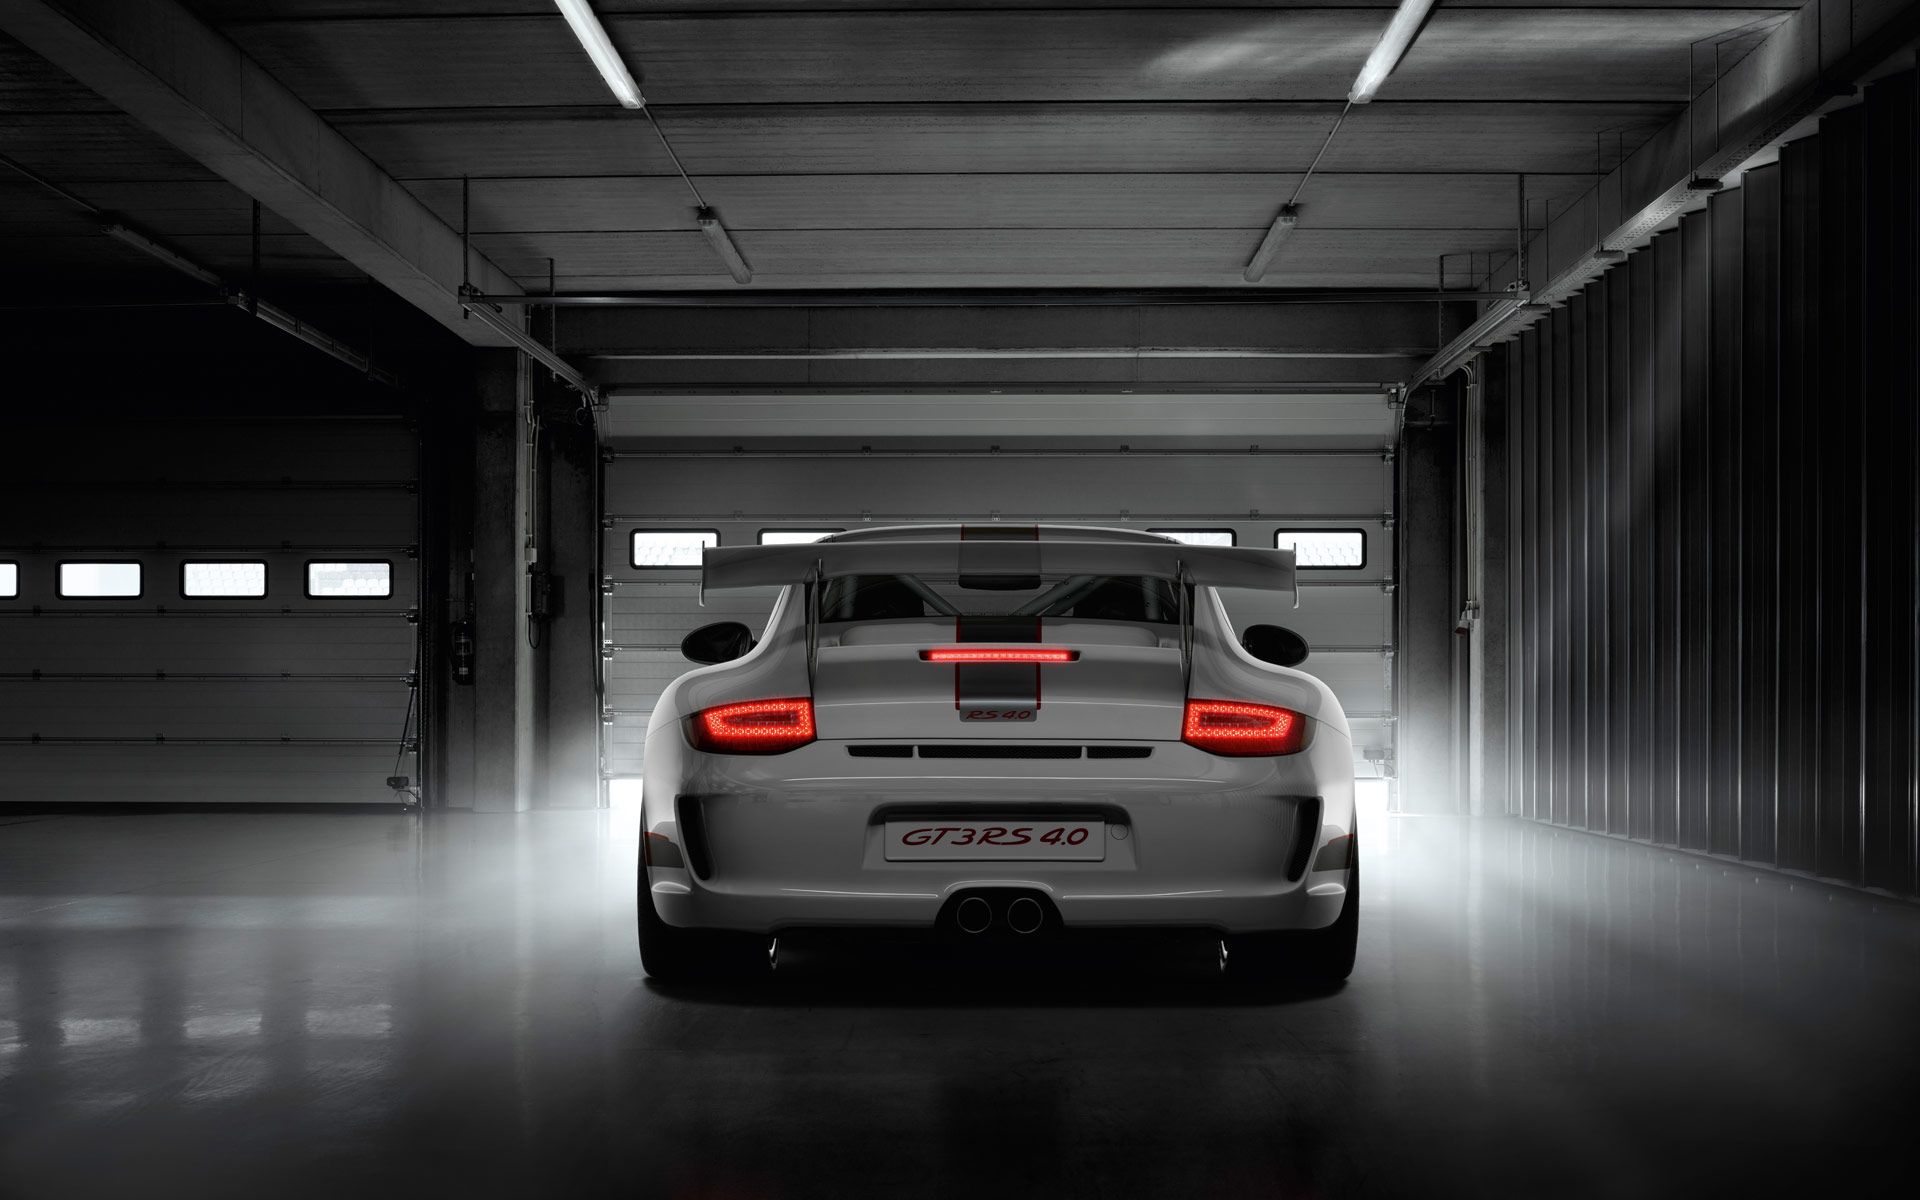 Porsche Gt3 Wallpaper Desktop Image